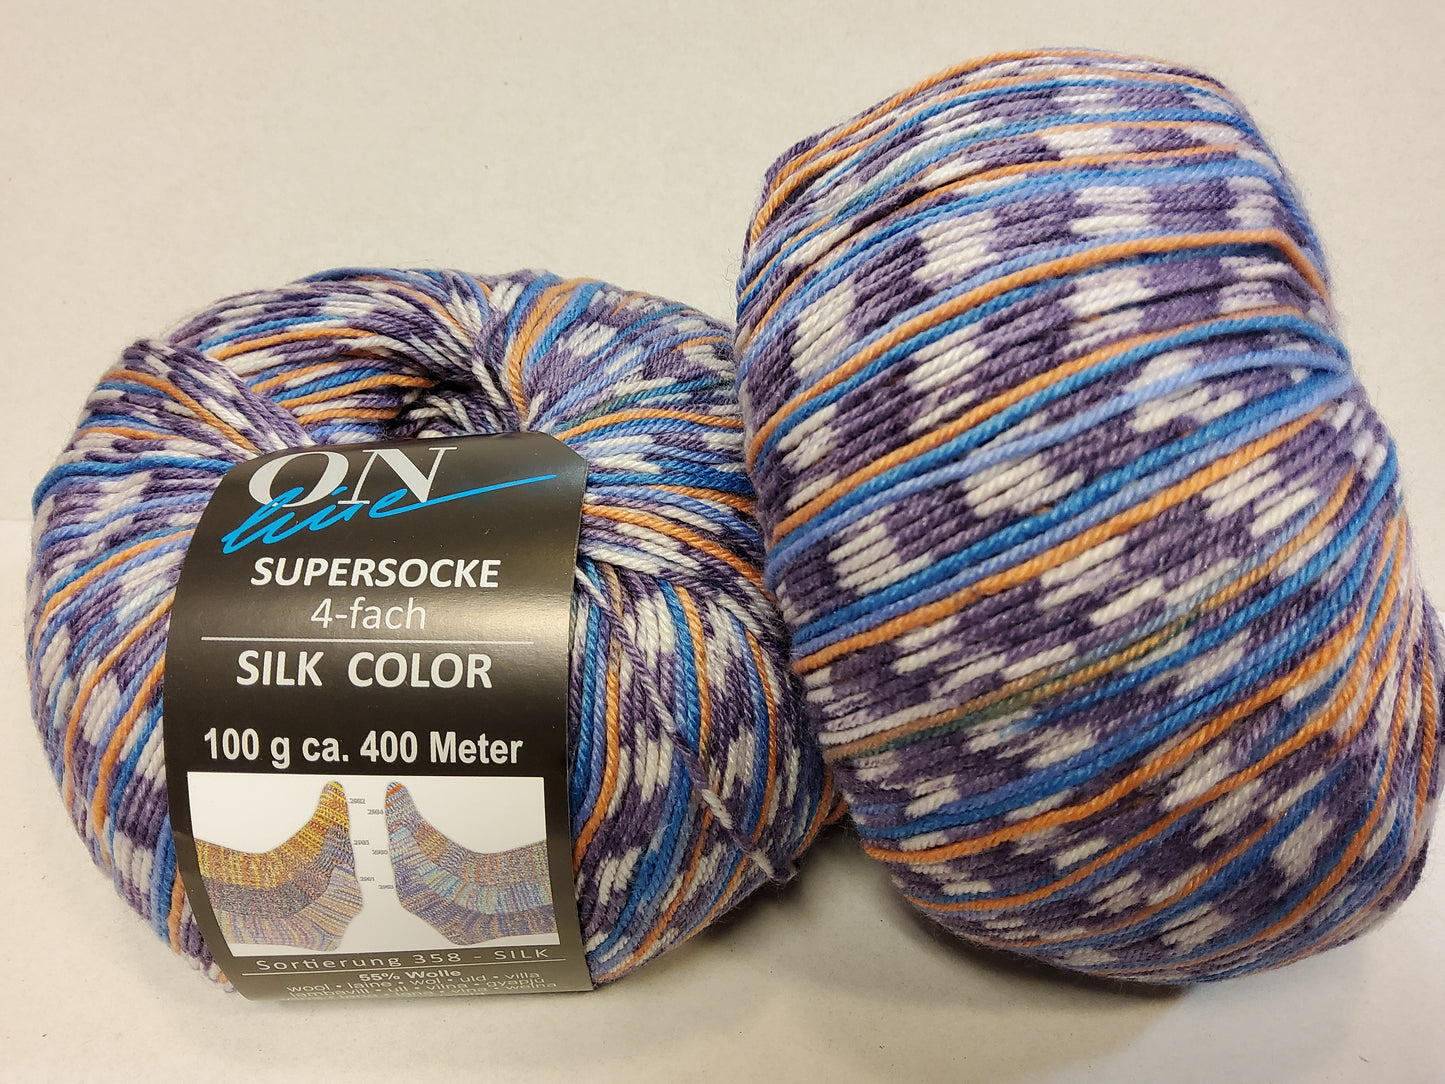 Supersocke 4 fach Silk Color Sortierung 358